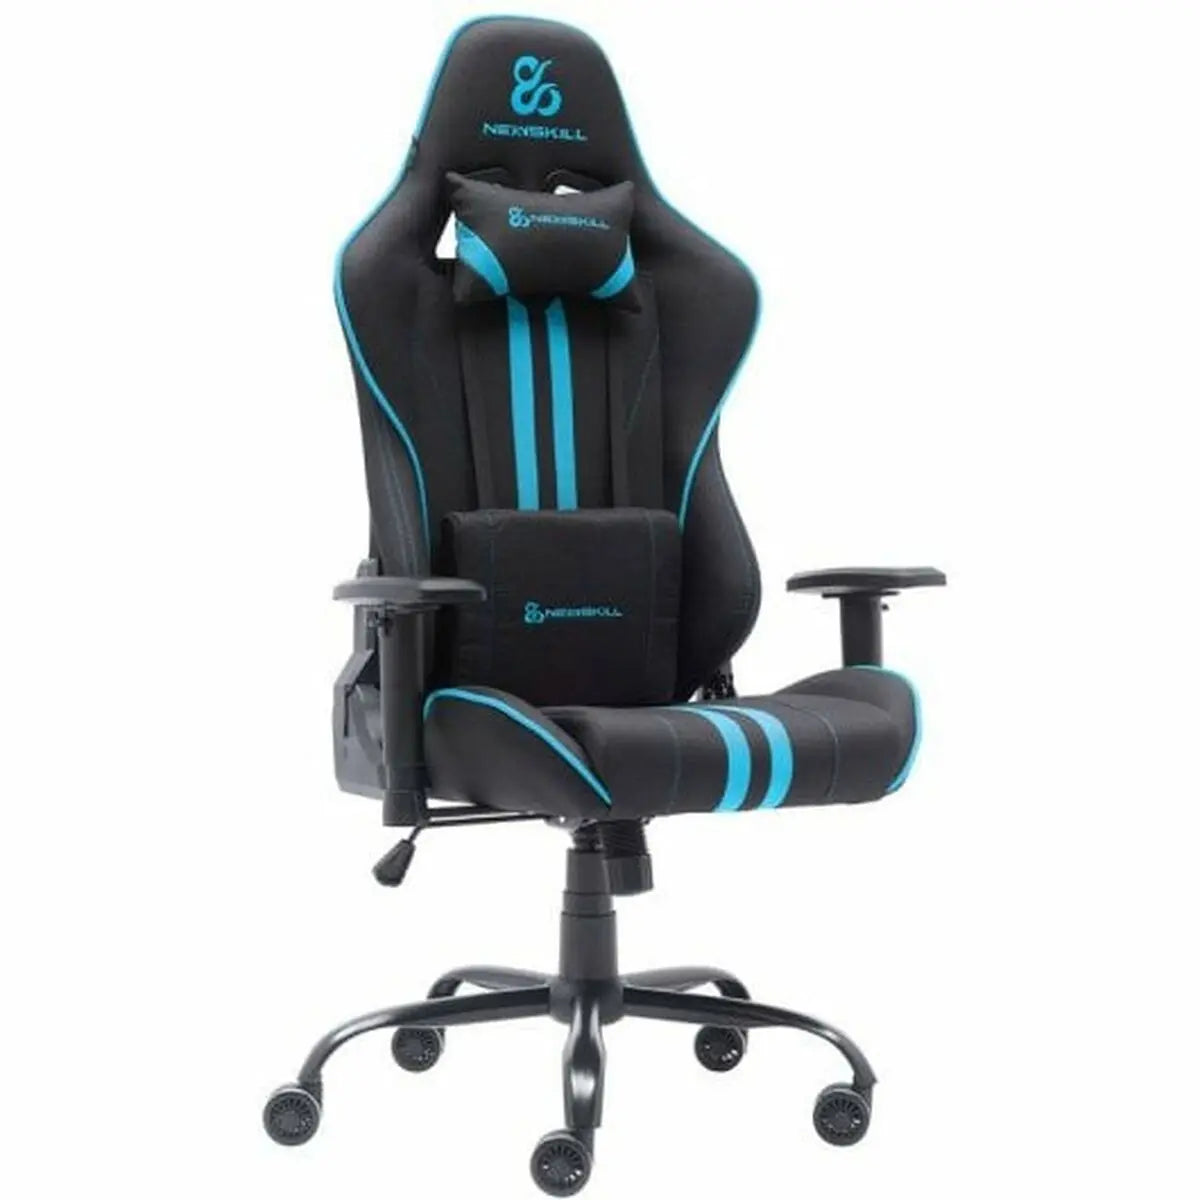 Gaming Chair Newskill Kitsune V2 Blue - IGSI Europe Ltd